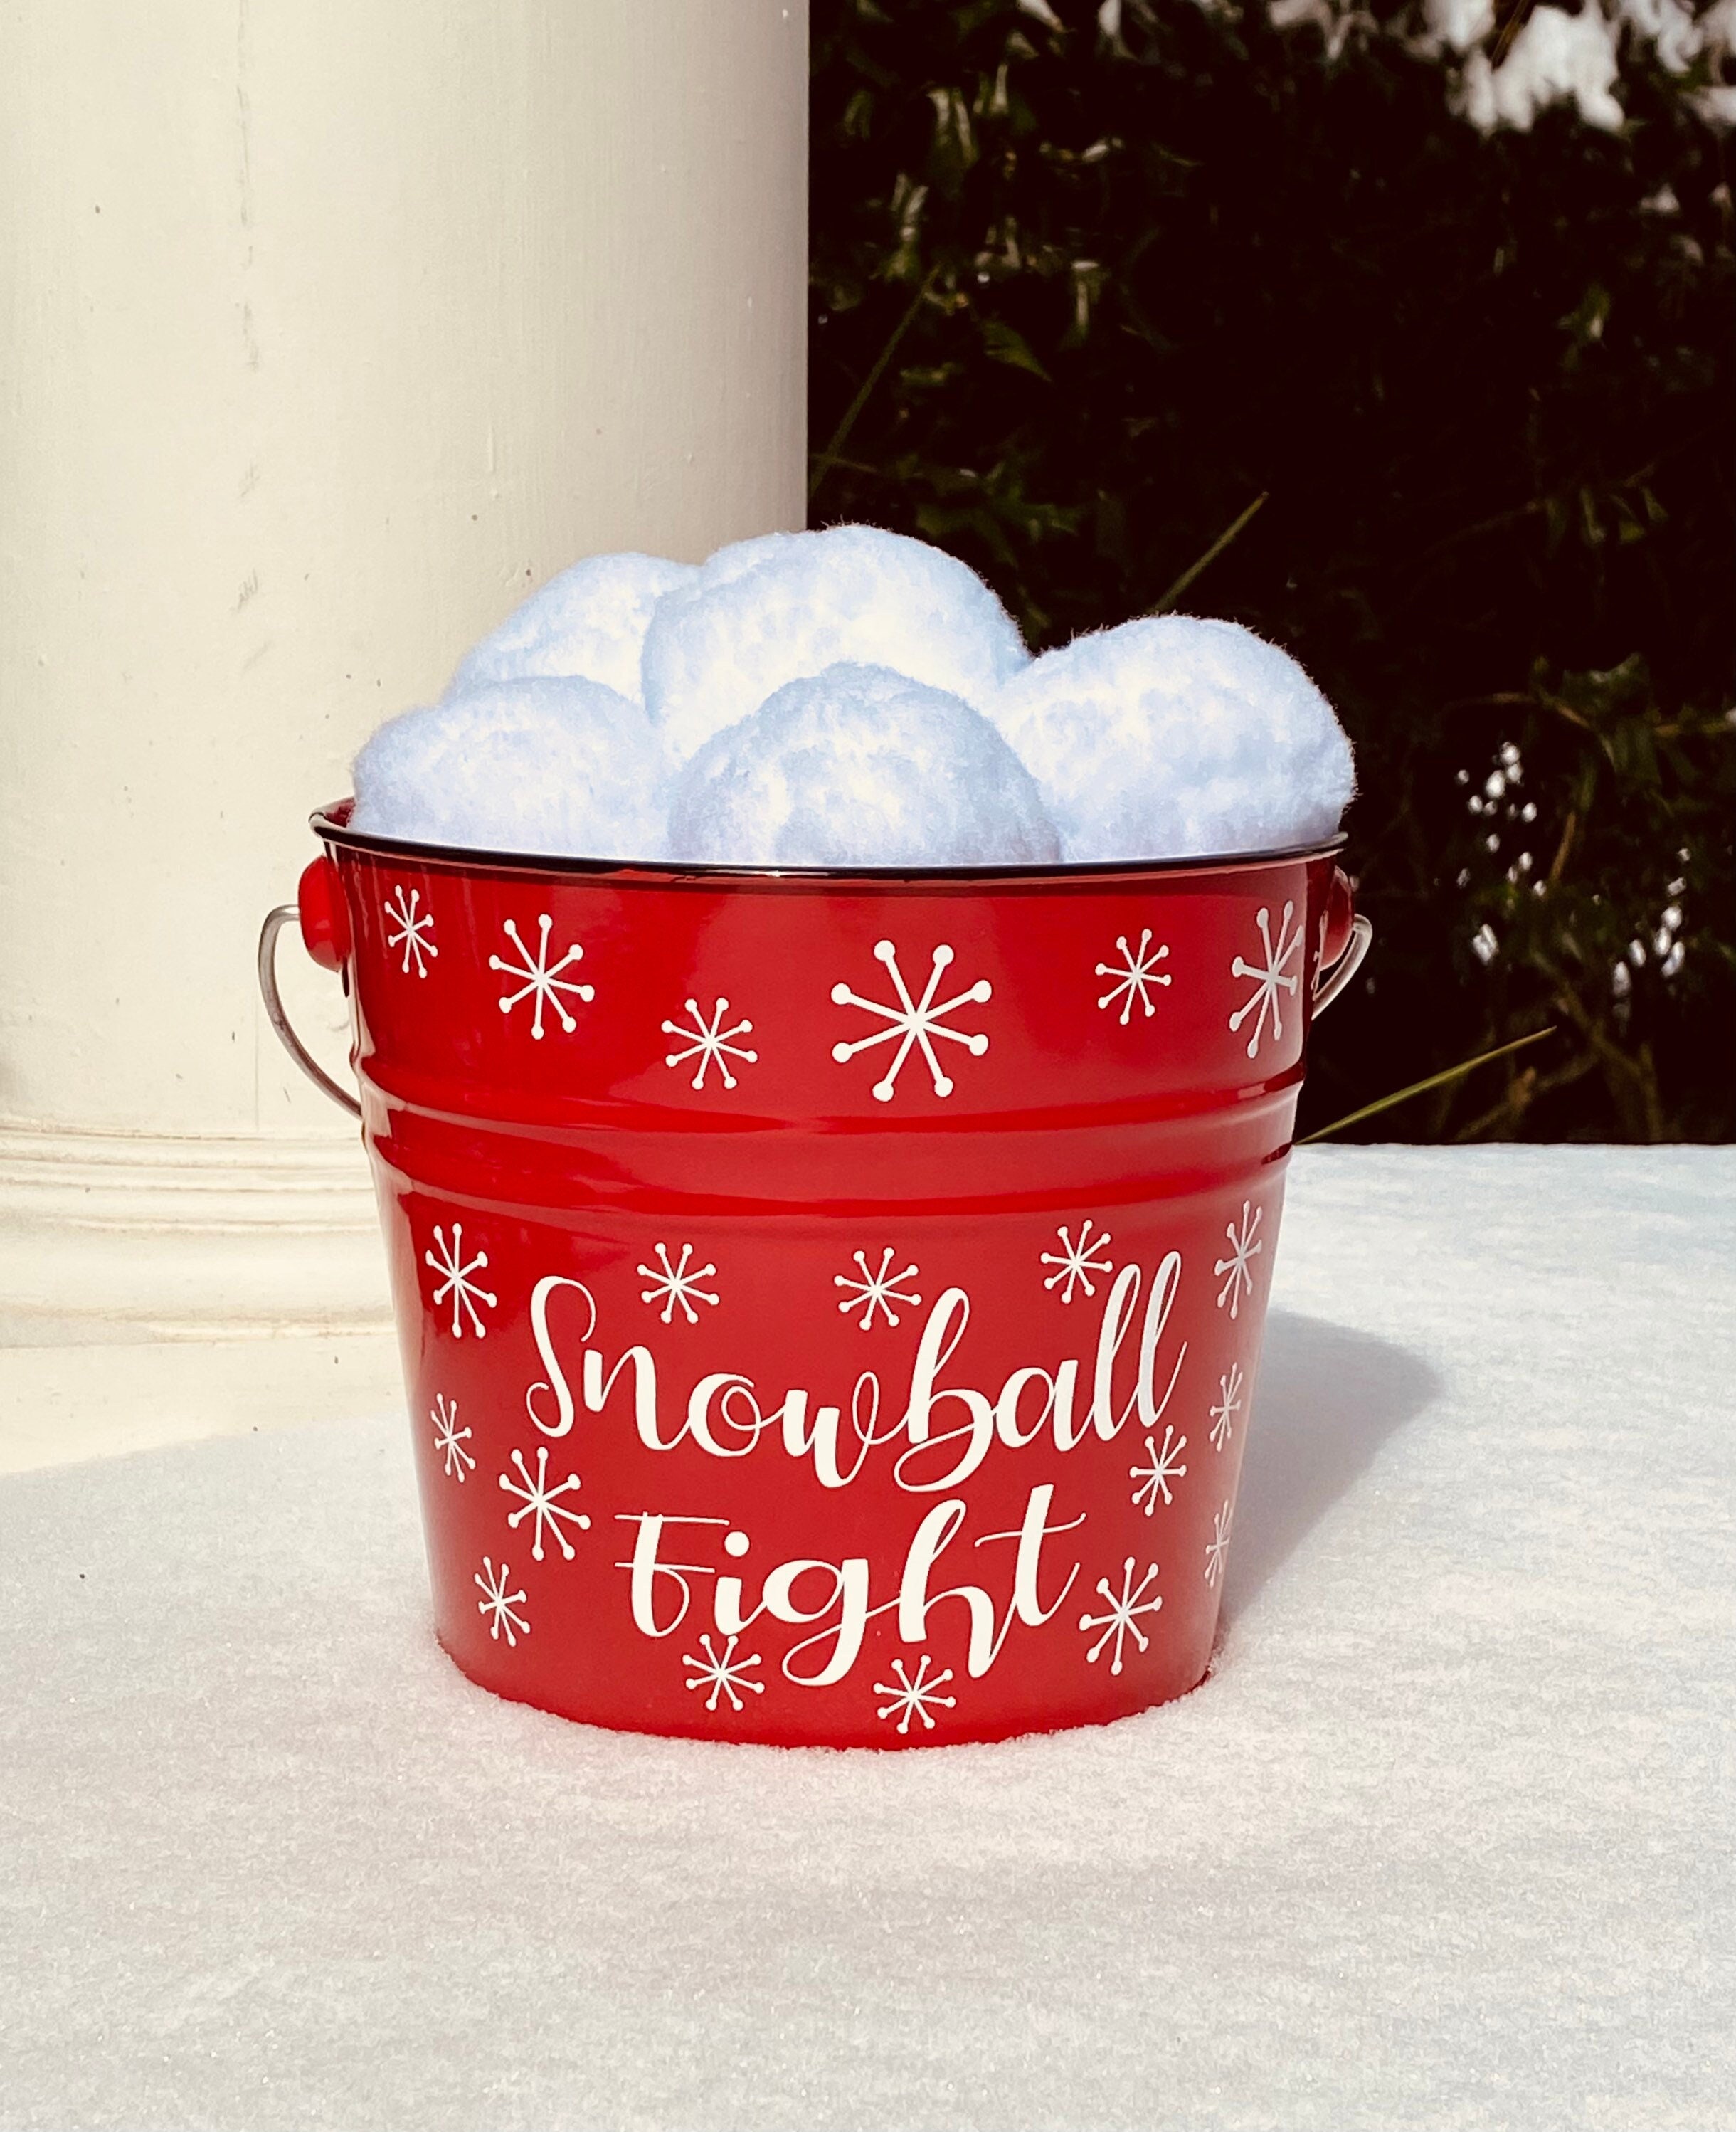 Decorative Snowballs - 100 Things 2 Do